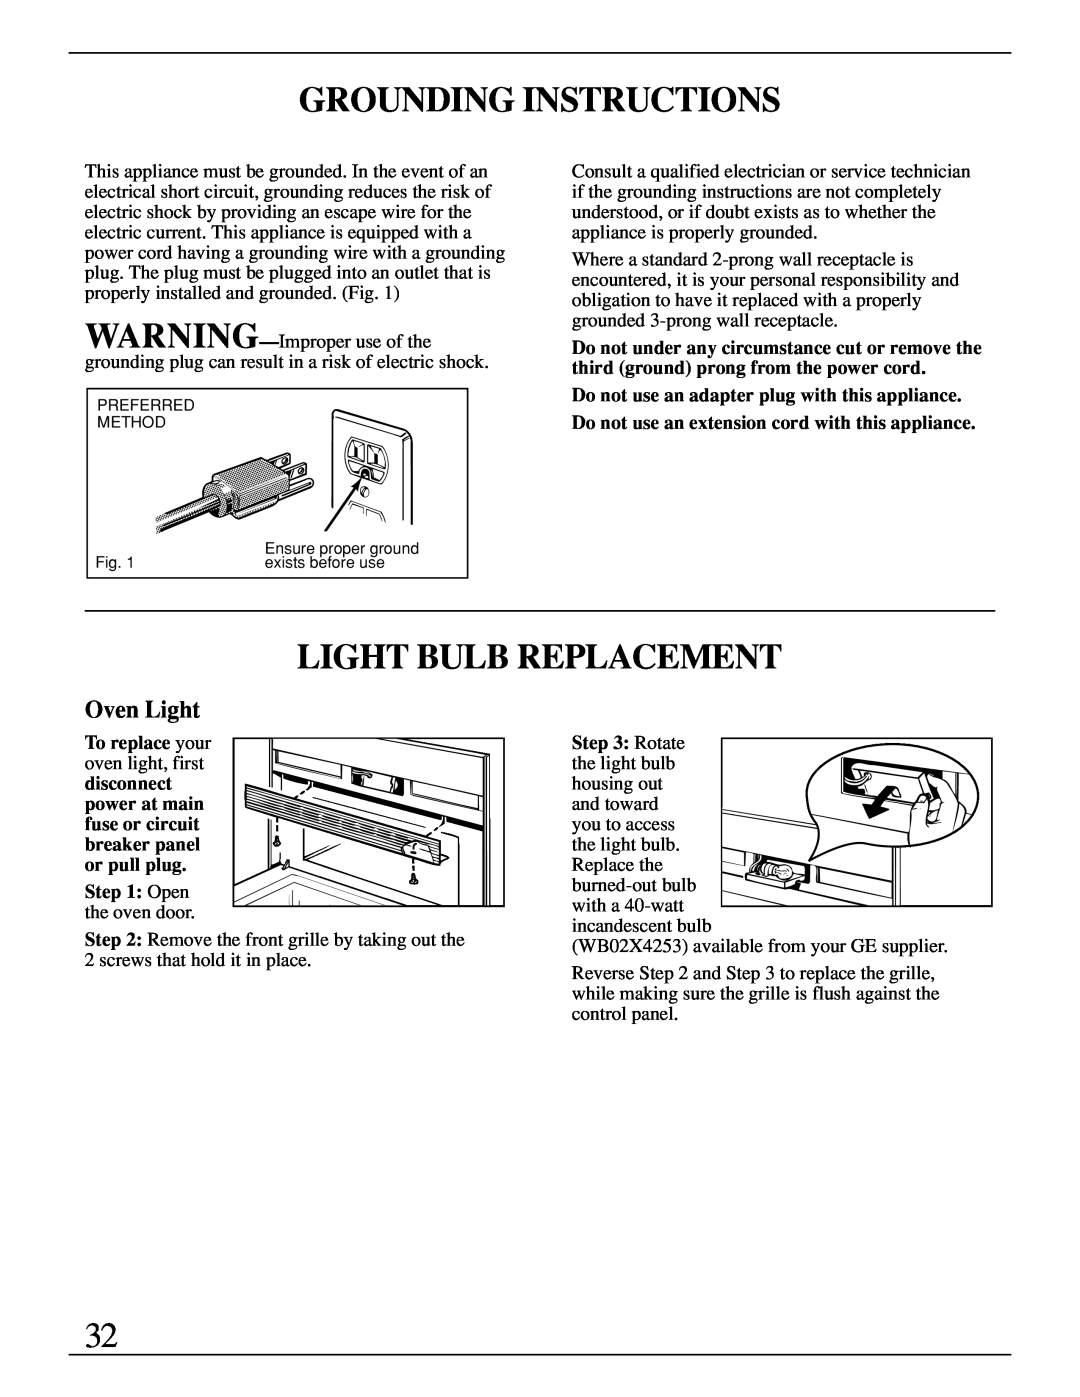 GE Monogram ZMC1095 owner manual Grounding Instructions, Light Bulb Replacement, Oven Light 